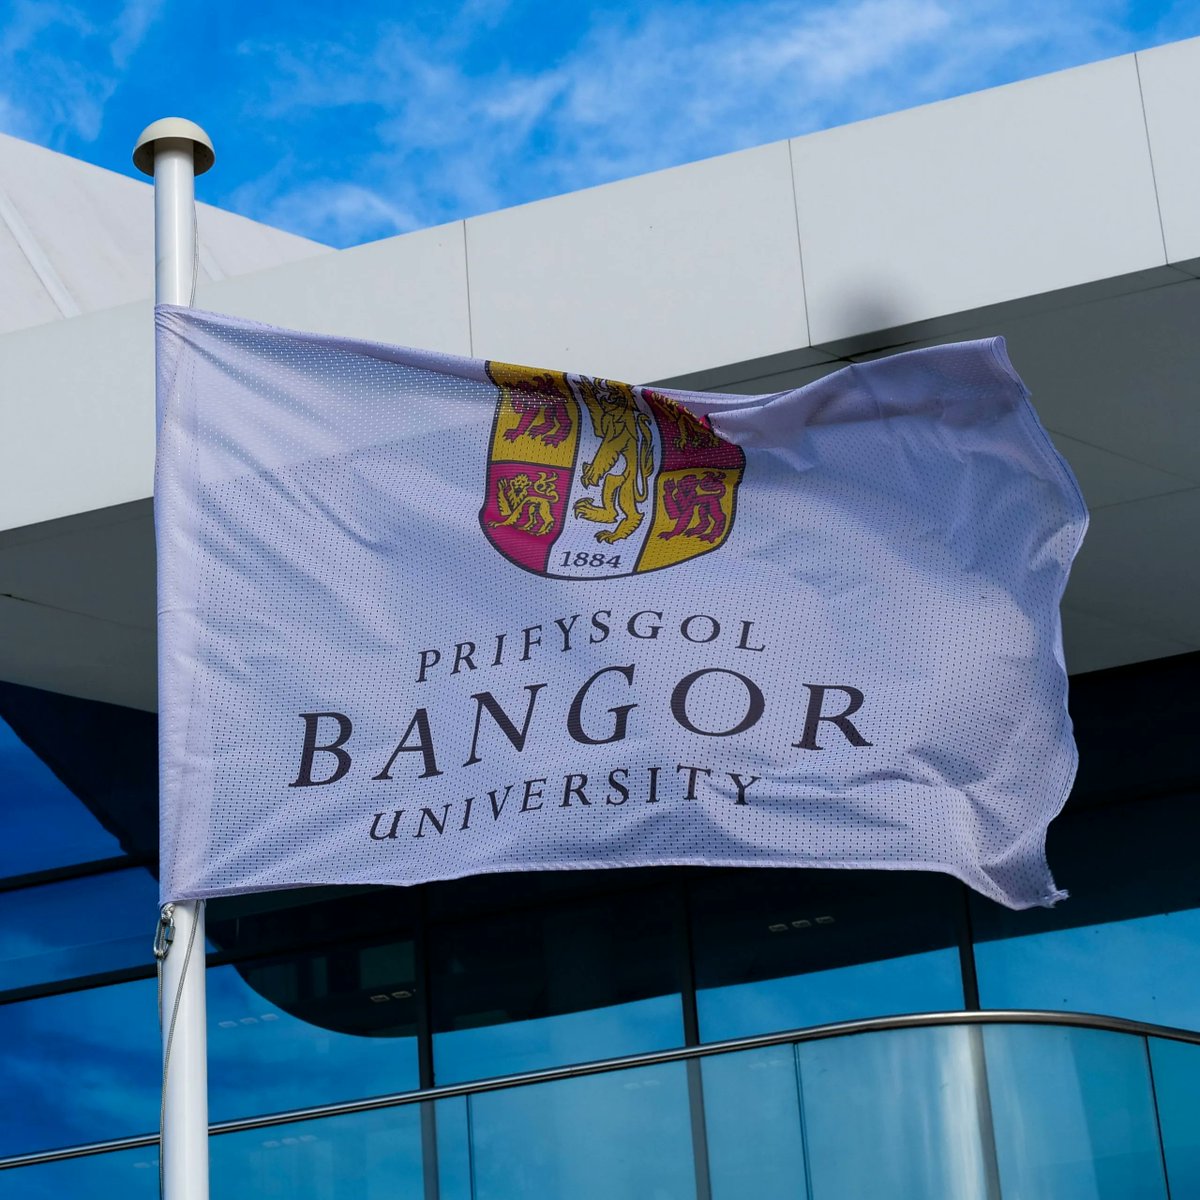 41 Master (MSc) & Research positions at Bangor University (UK): owlindex.com/service-explor… 

 #owlindex #PhD #PhDposition #phdresearch #phdjobs #Research #researchers #University #uk #mscgraduate #masterposition #bangor #bangoruniversity #Bangorjobs @owlindex @bangoruniversity